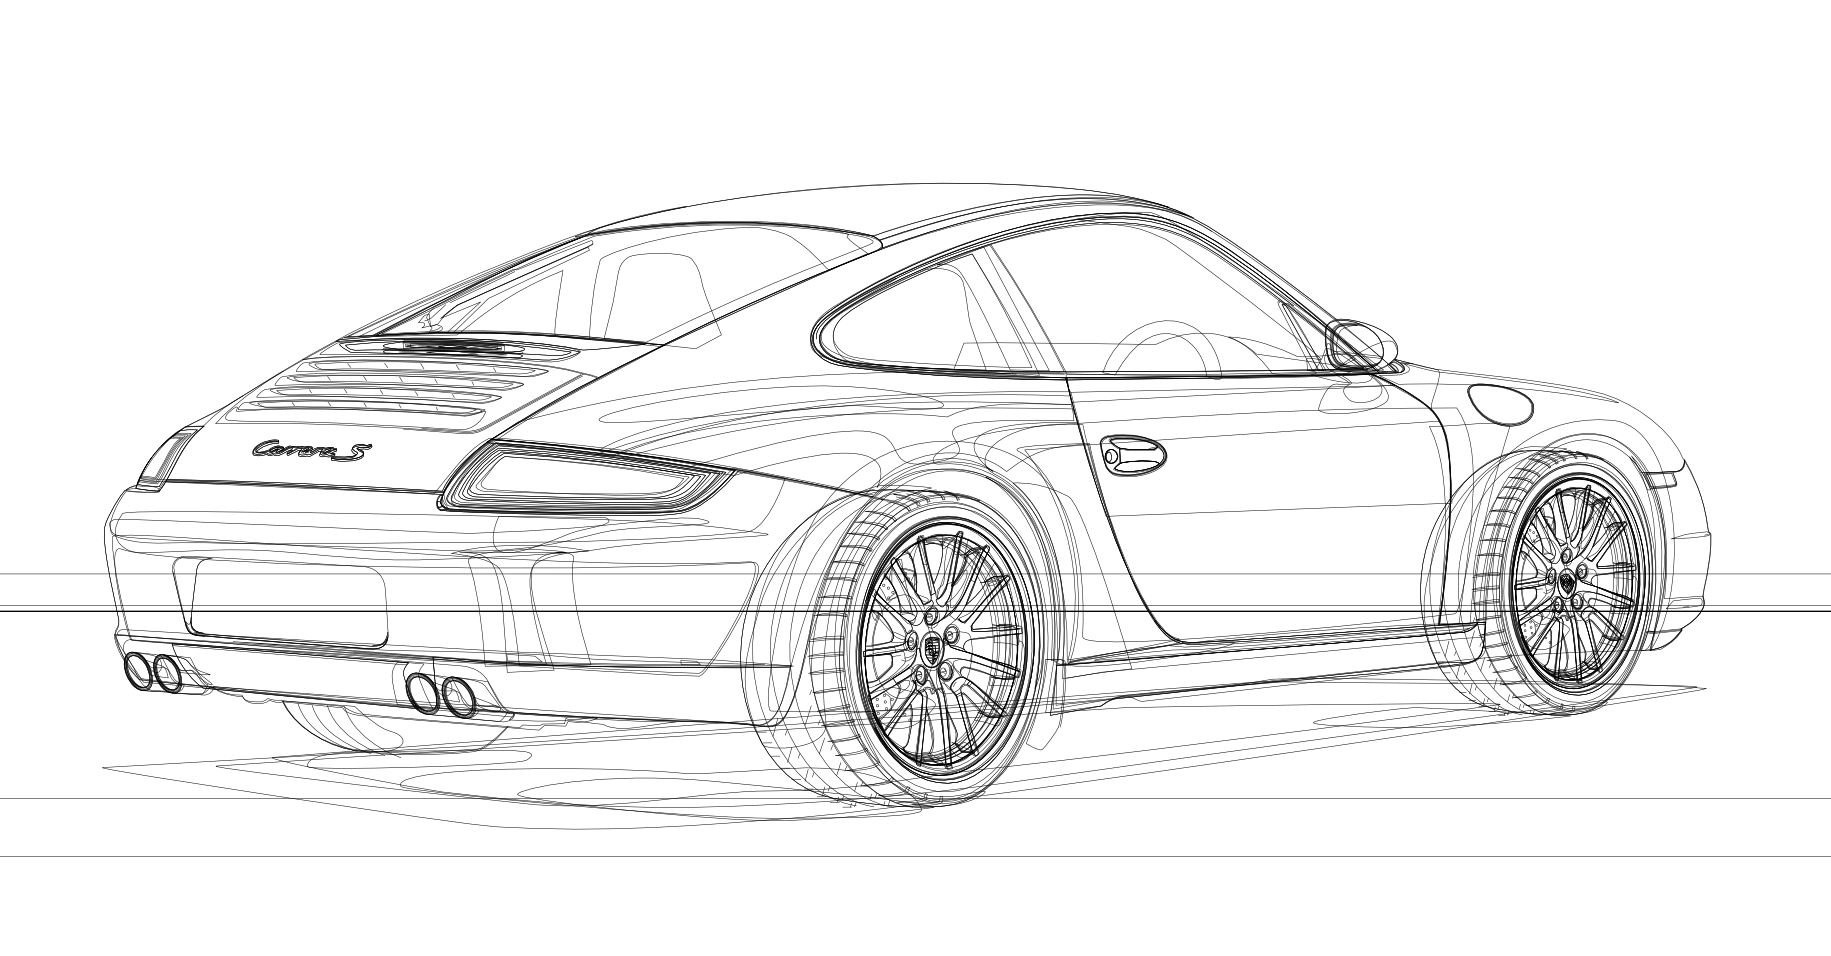 Porsche 911 Carrera 4S Realistic Car Sketch by AmateurCartist on DeviantArt